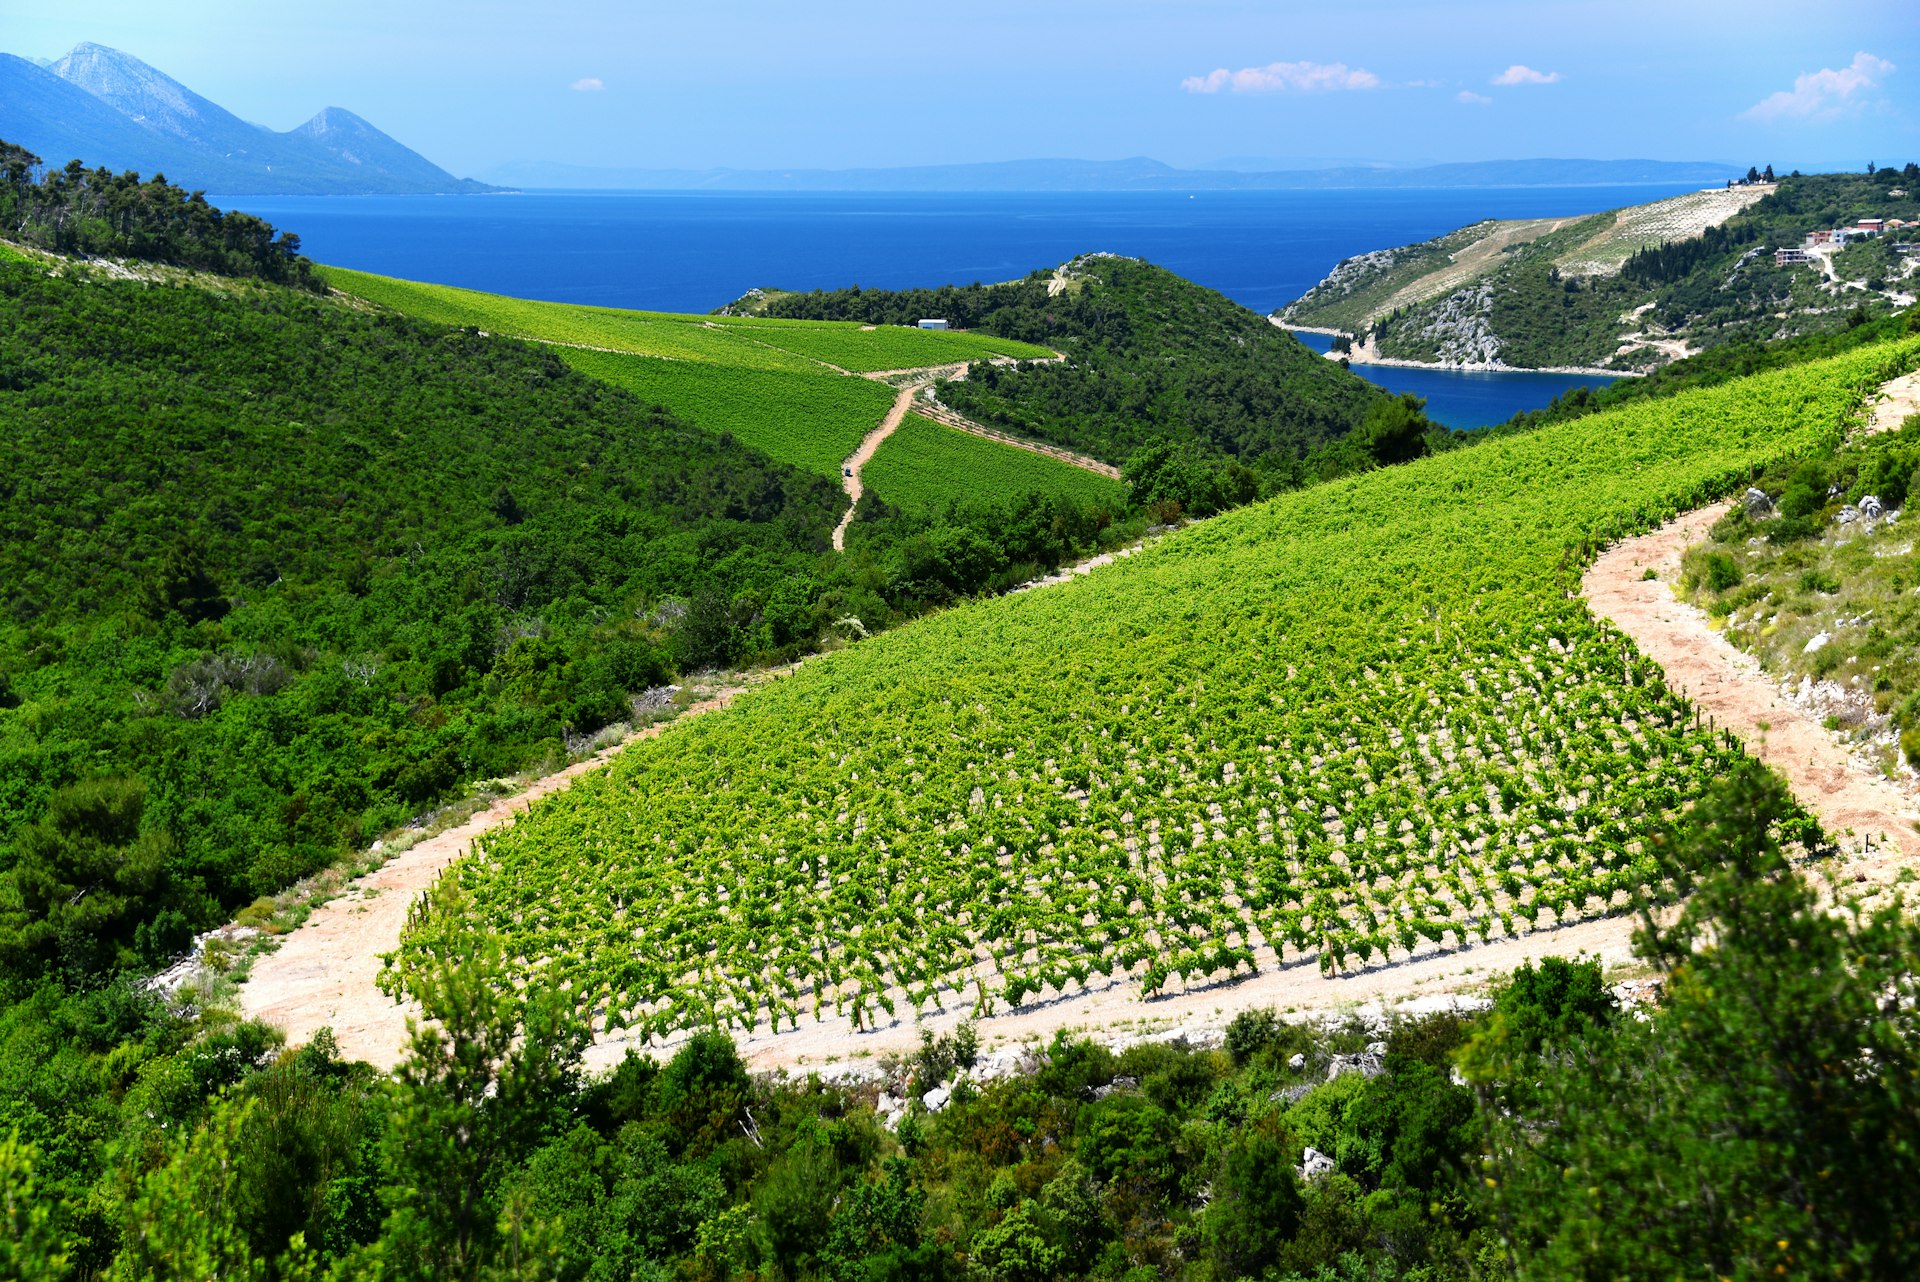 Vineyard in Dalmatia, Croatia, at the Adriatic Coast